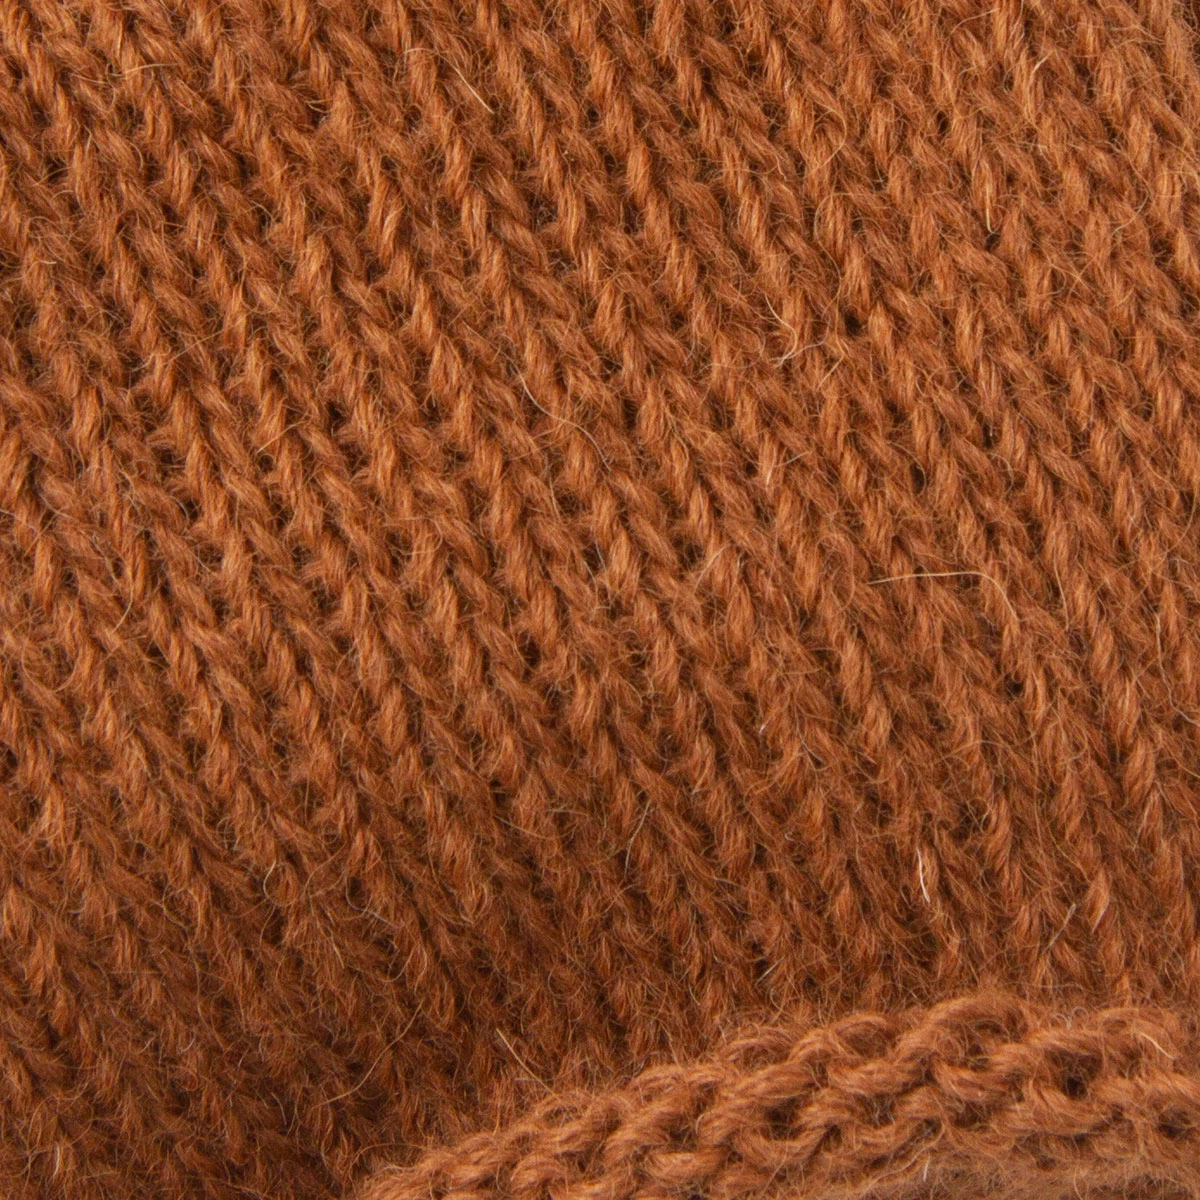 Heritage alpaca yarn